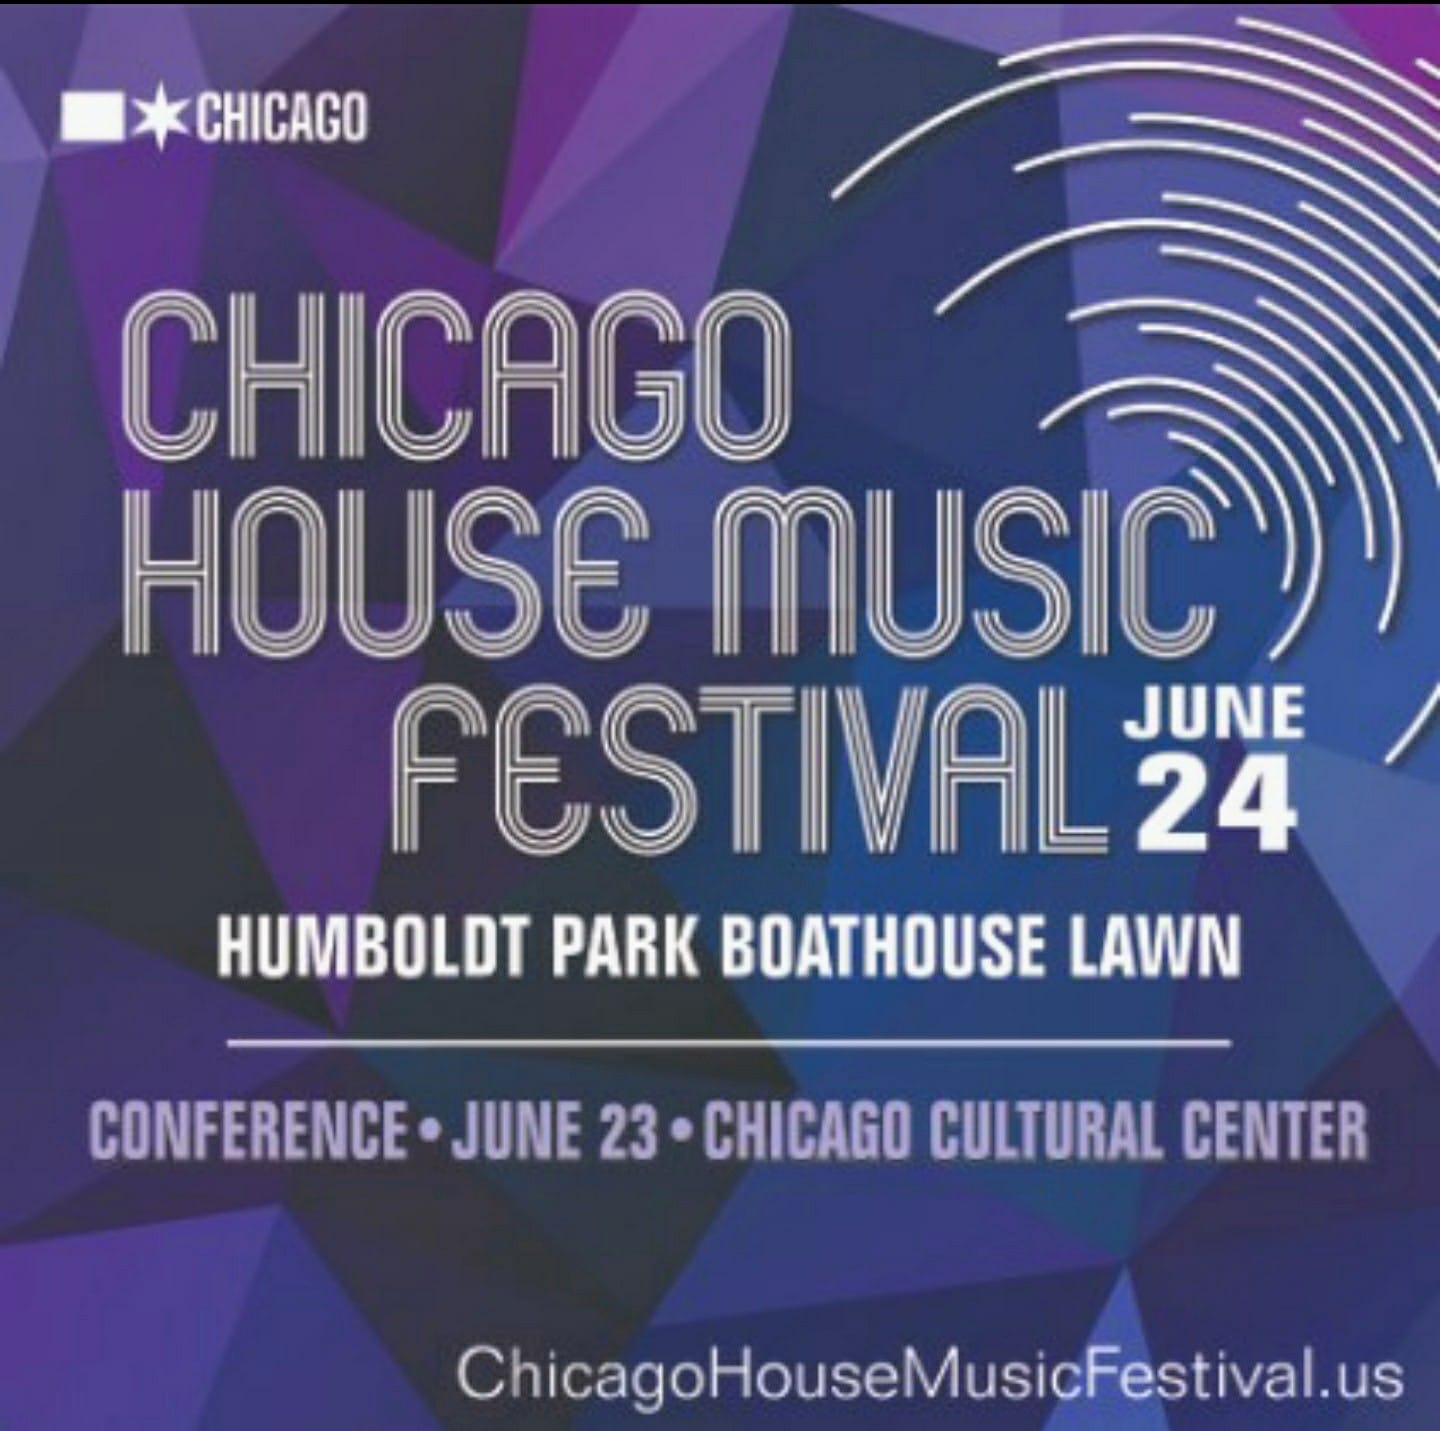 Chicago House Music Festival at Humboldt Park Boathouse on Sat, Jun